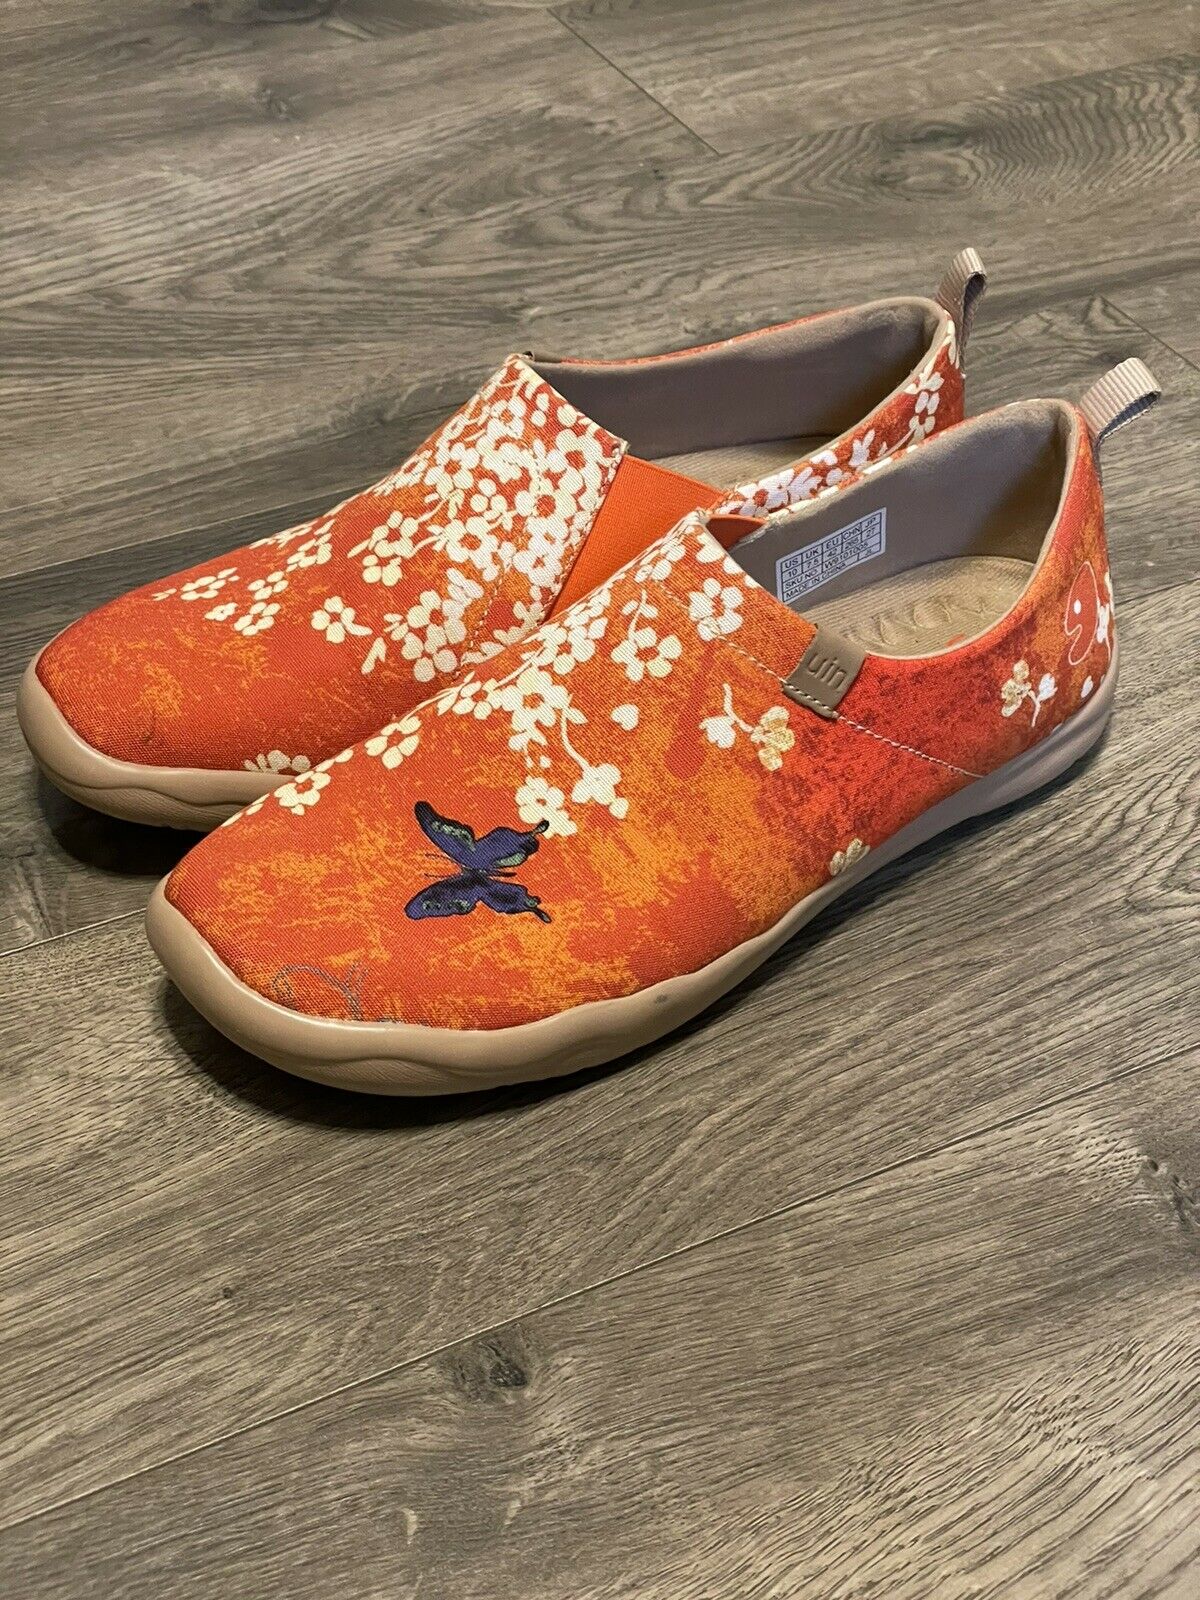 UIN TOLEDO Art Travel Shoes Sakura Canvas Floral Orange Butterfly size 10 NEW